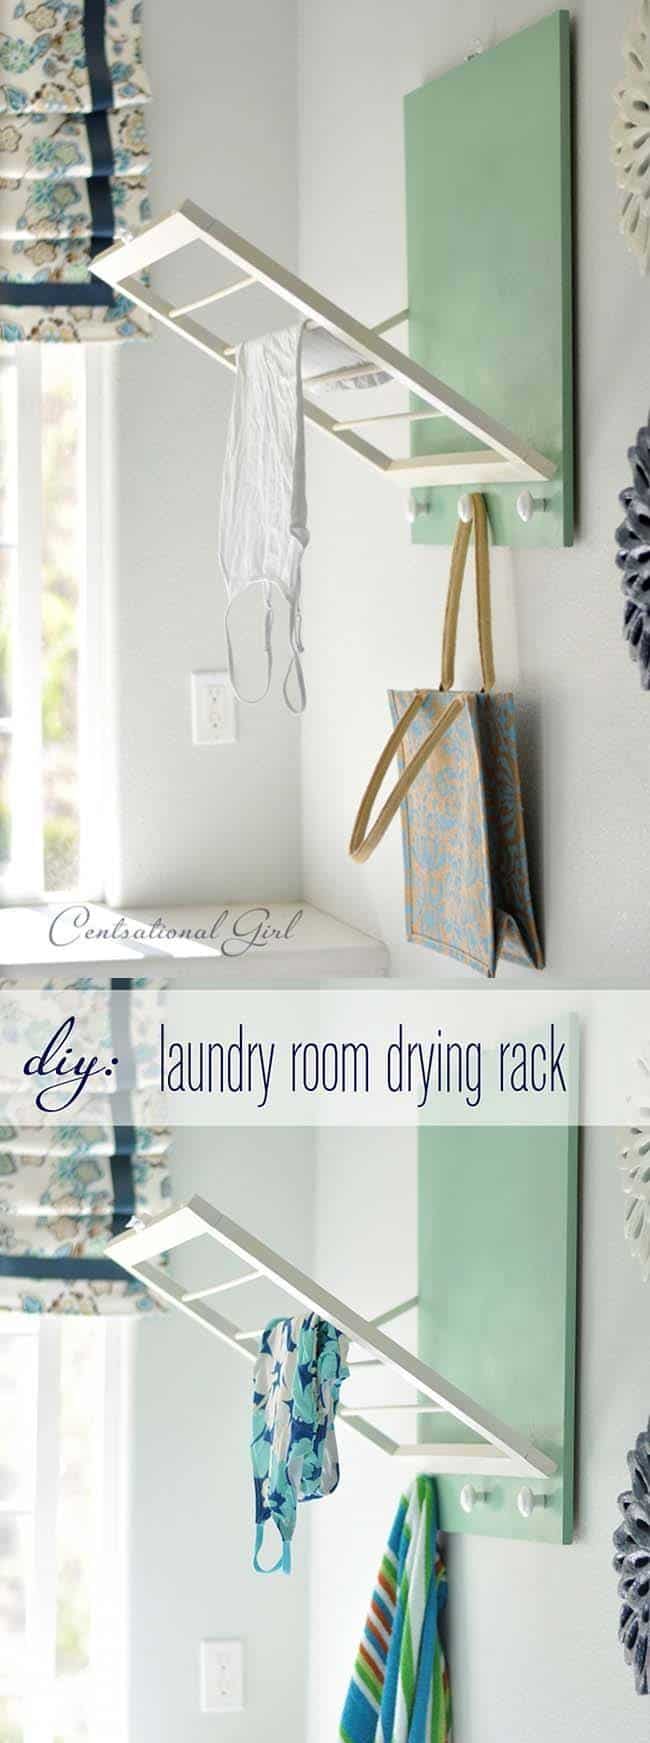 Laundry Room Organization Ideas-34-1 Kindesign